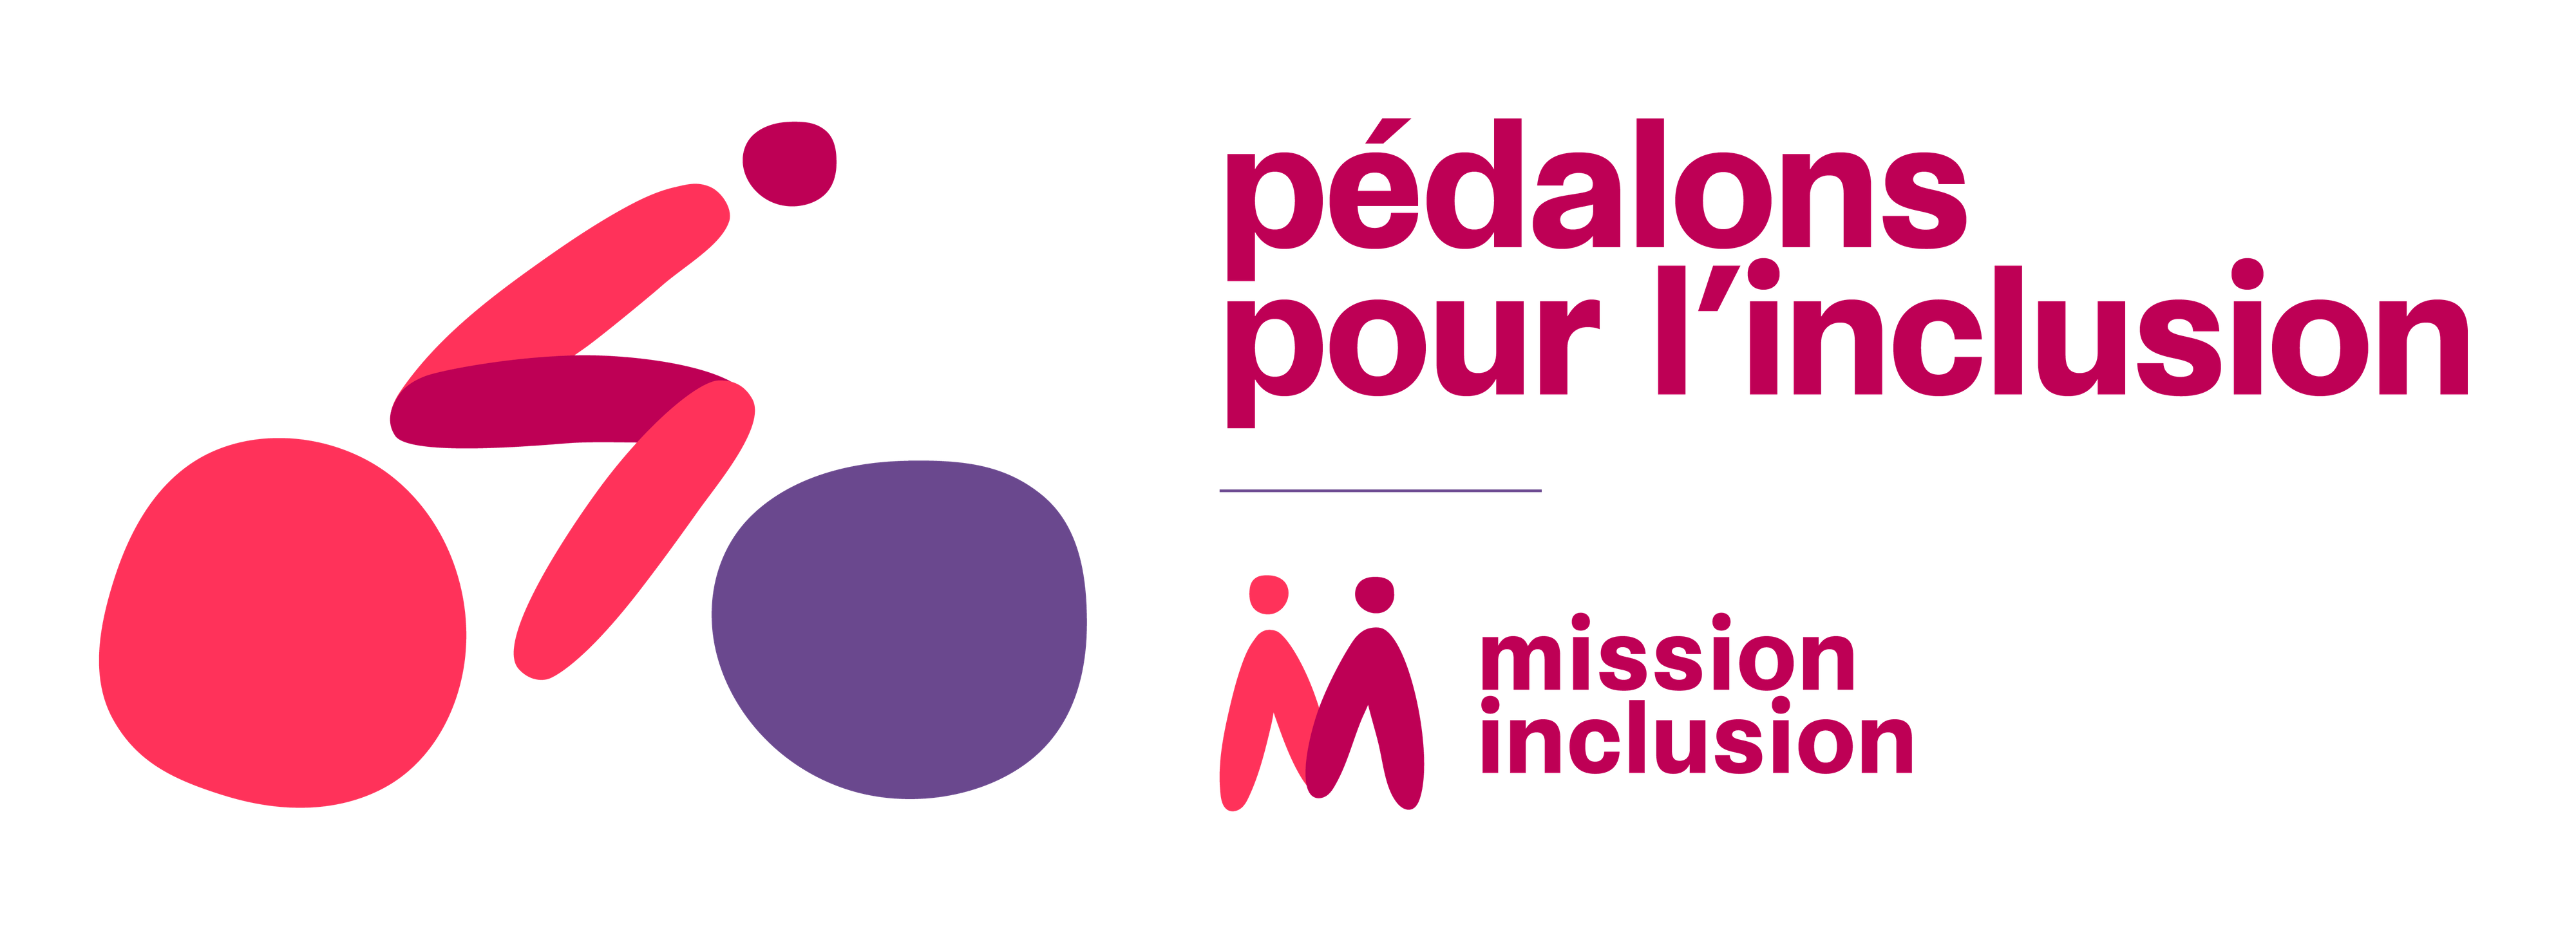 Mission inclusion Logo